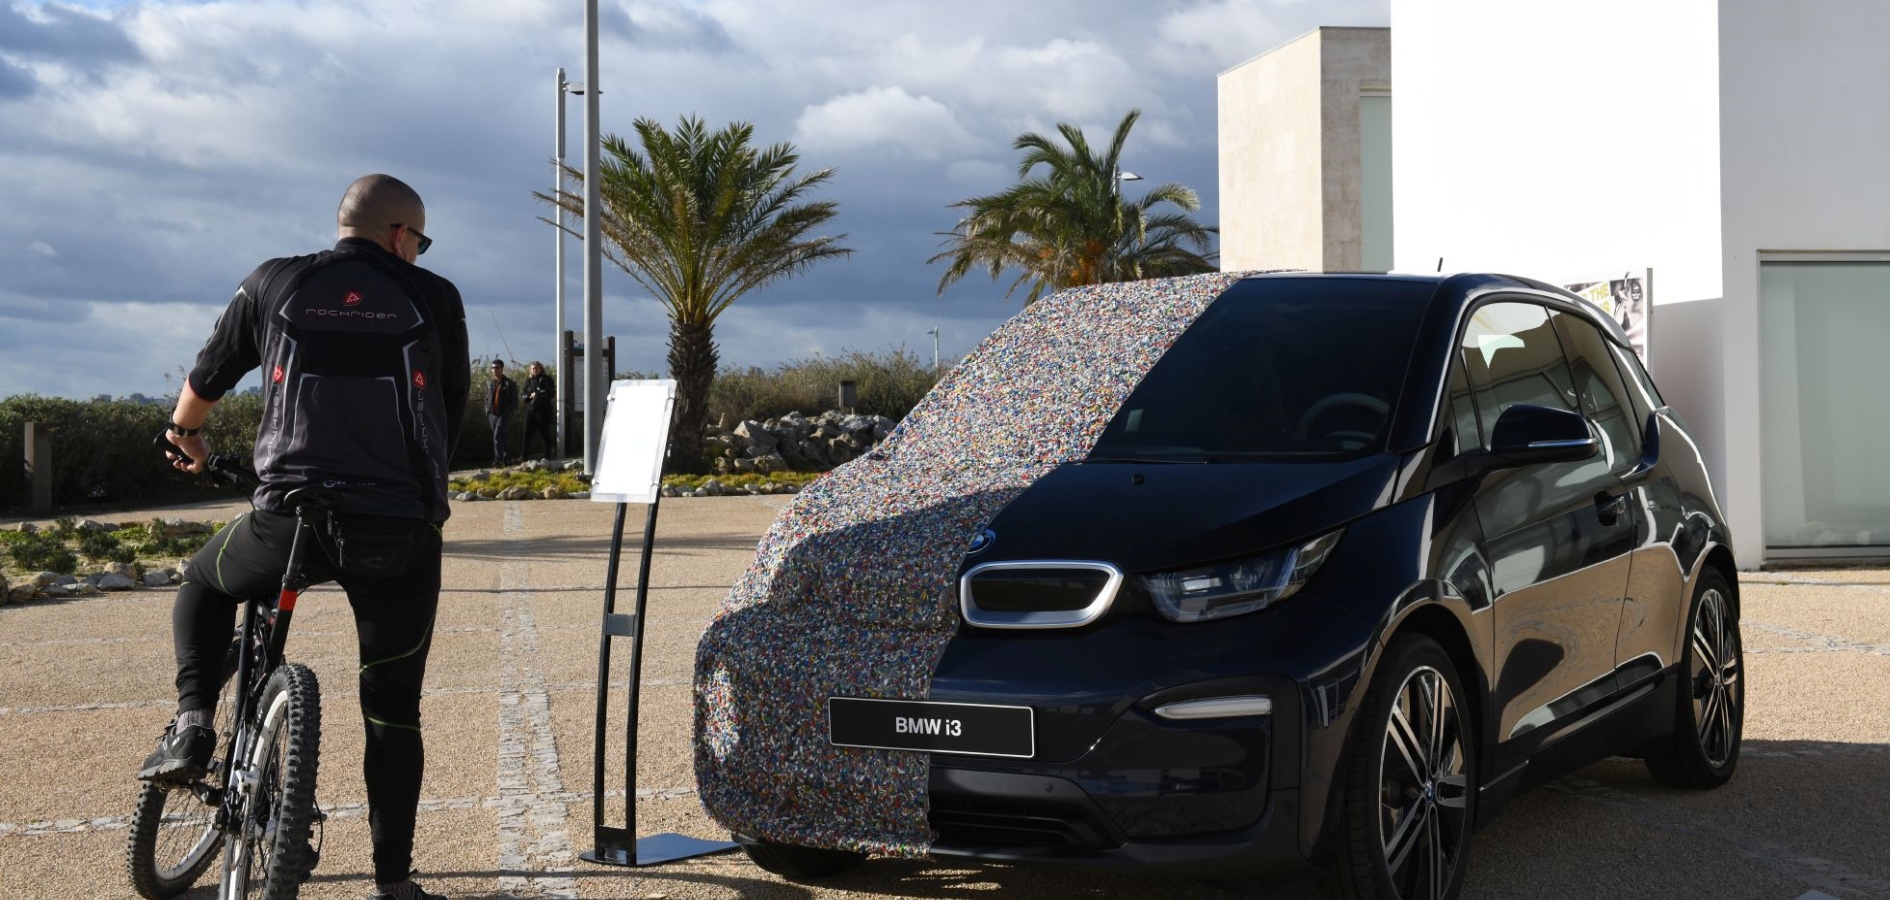 BMW M5 & BMW i3s, Lissabon, Portugal